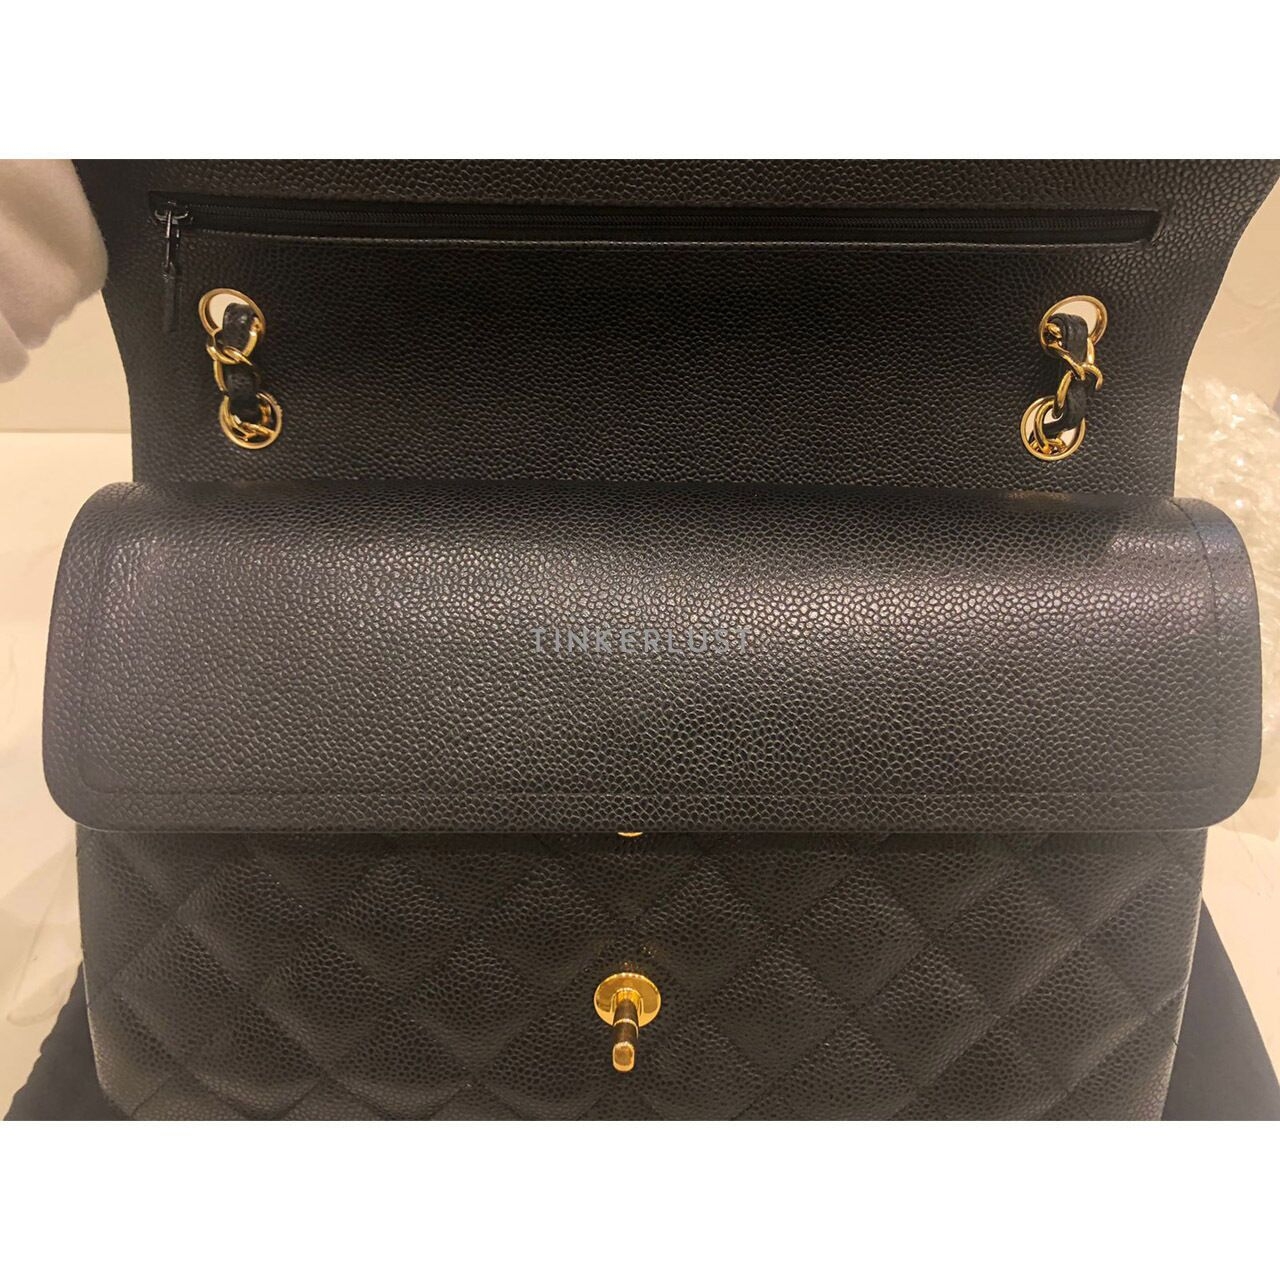 Chanel Classic Jumbo Black Caviar #20 Shoulder Bag